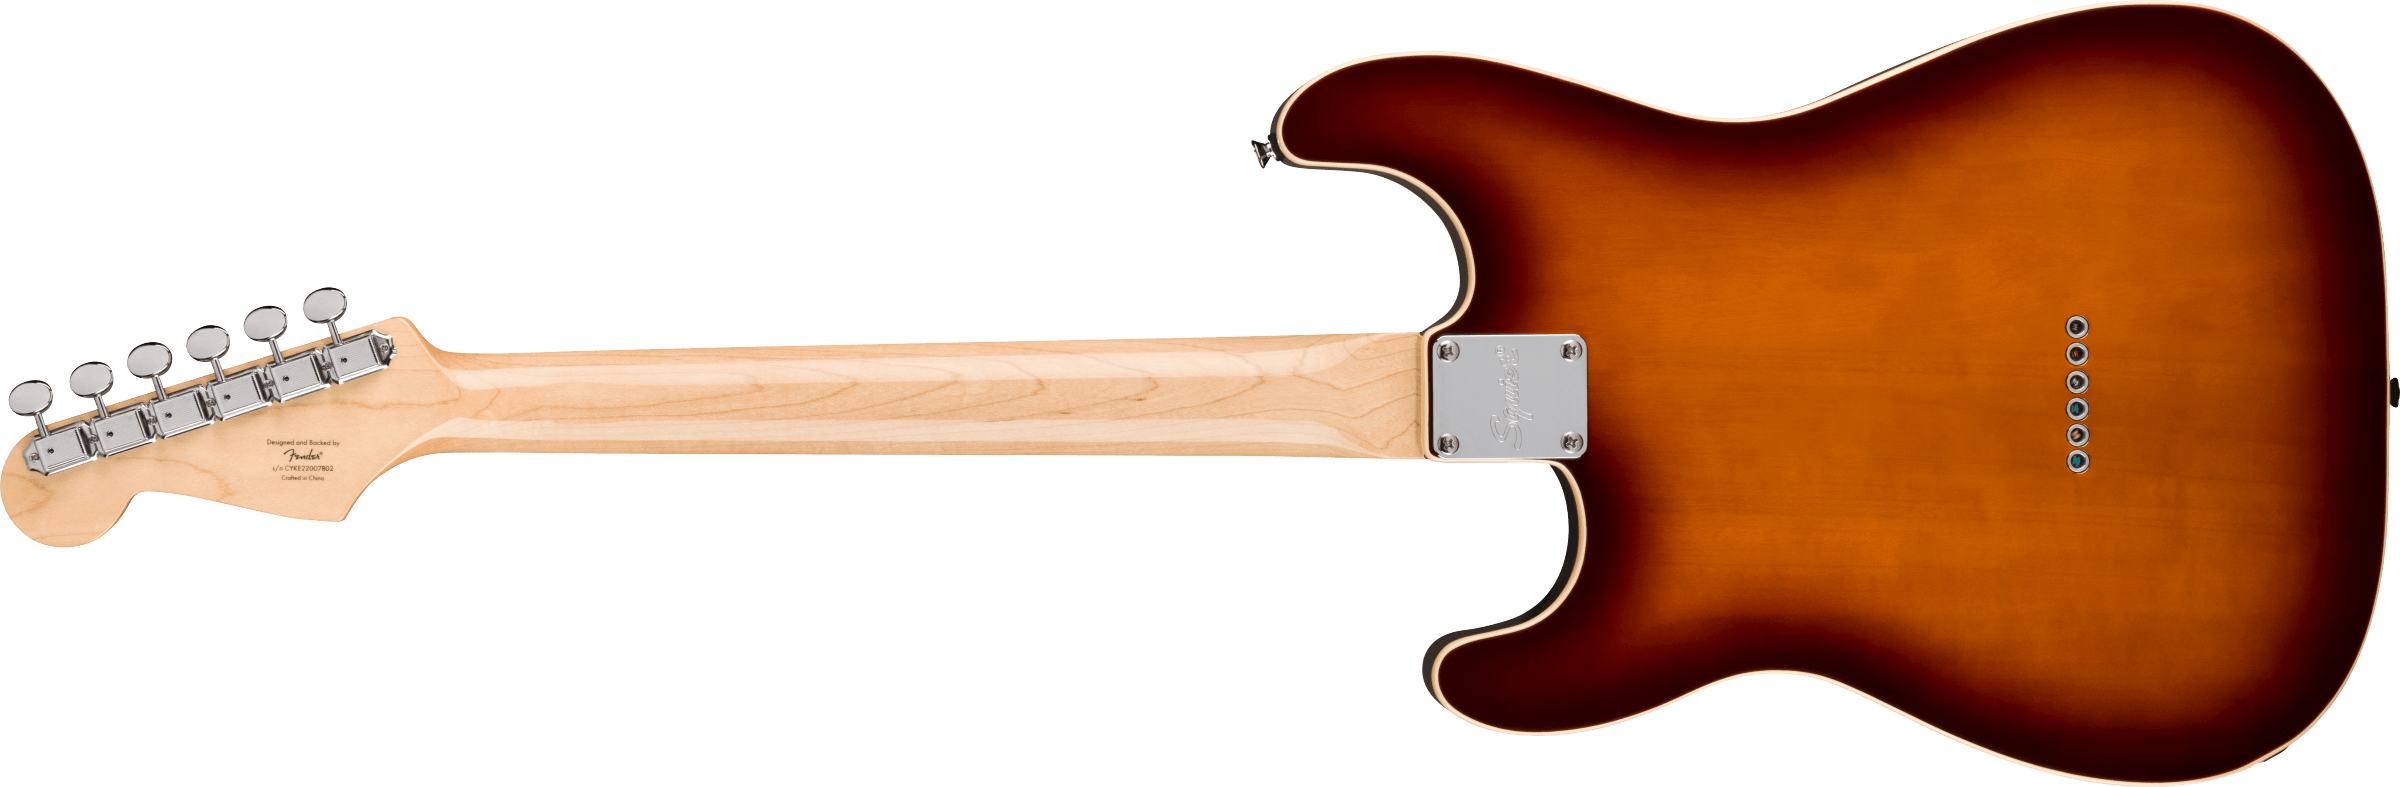 Squier Strat Custom Nashville Paranormal Series 3s Ht Lau - 2-color Sunburst - Str shape electric guitar - Variation 2